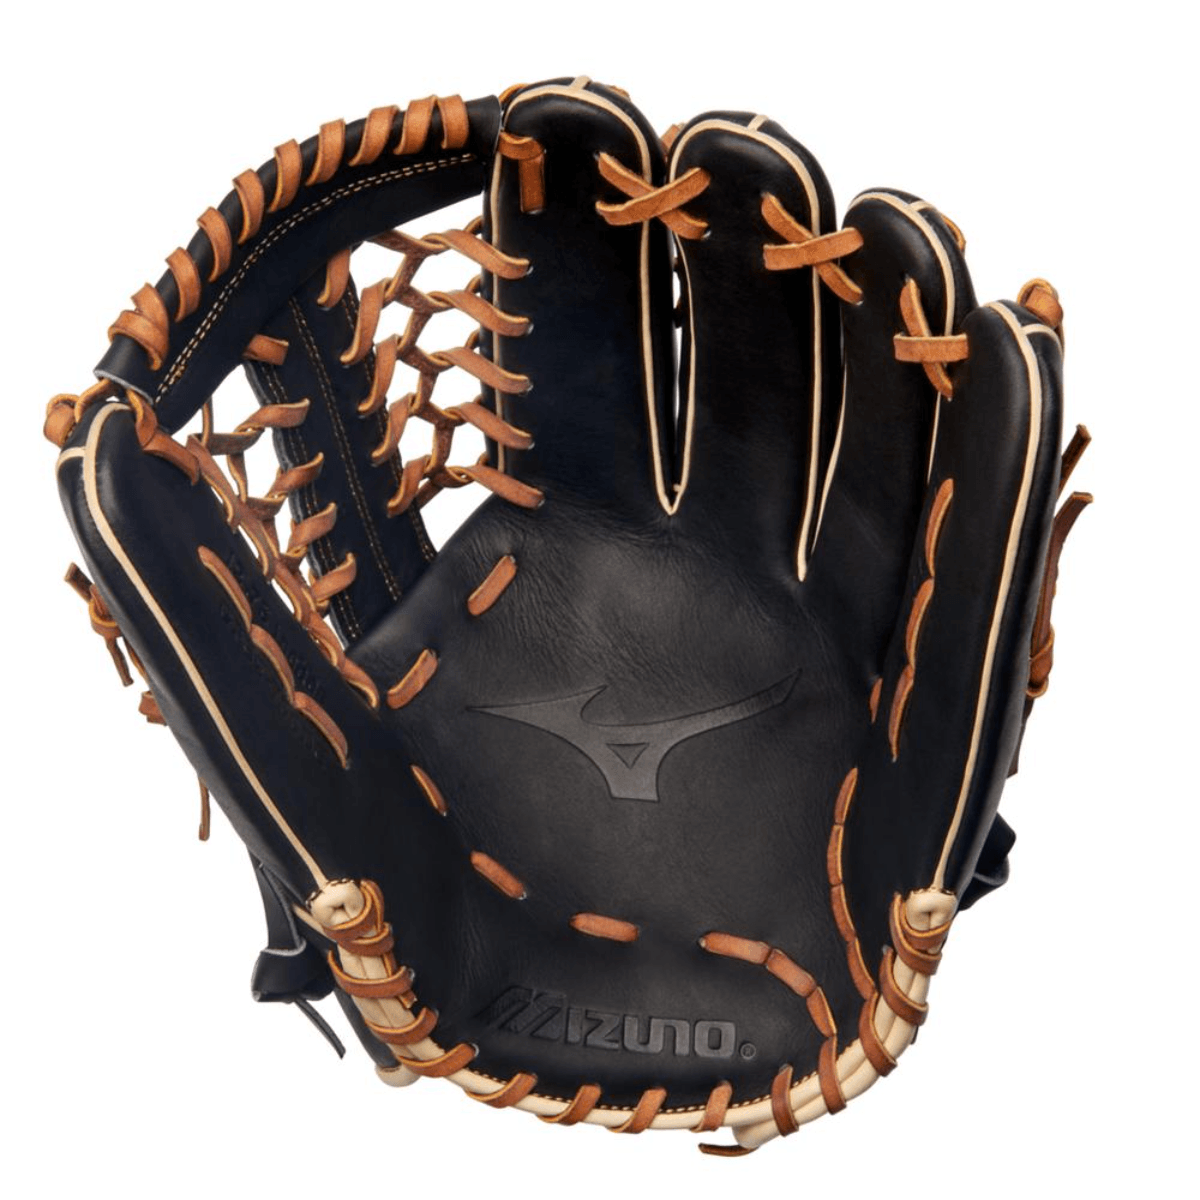 Mizuno Pro Select Outfield Deep Pocket Baseball Glove 12.75